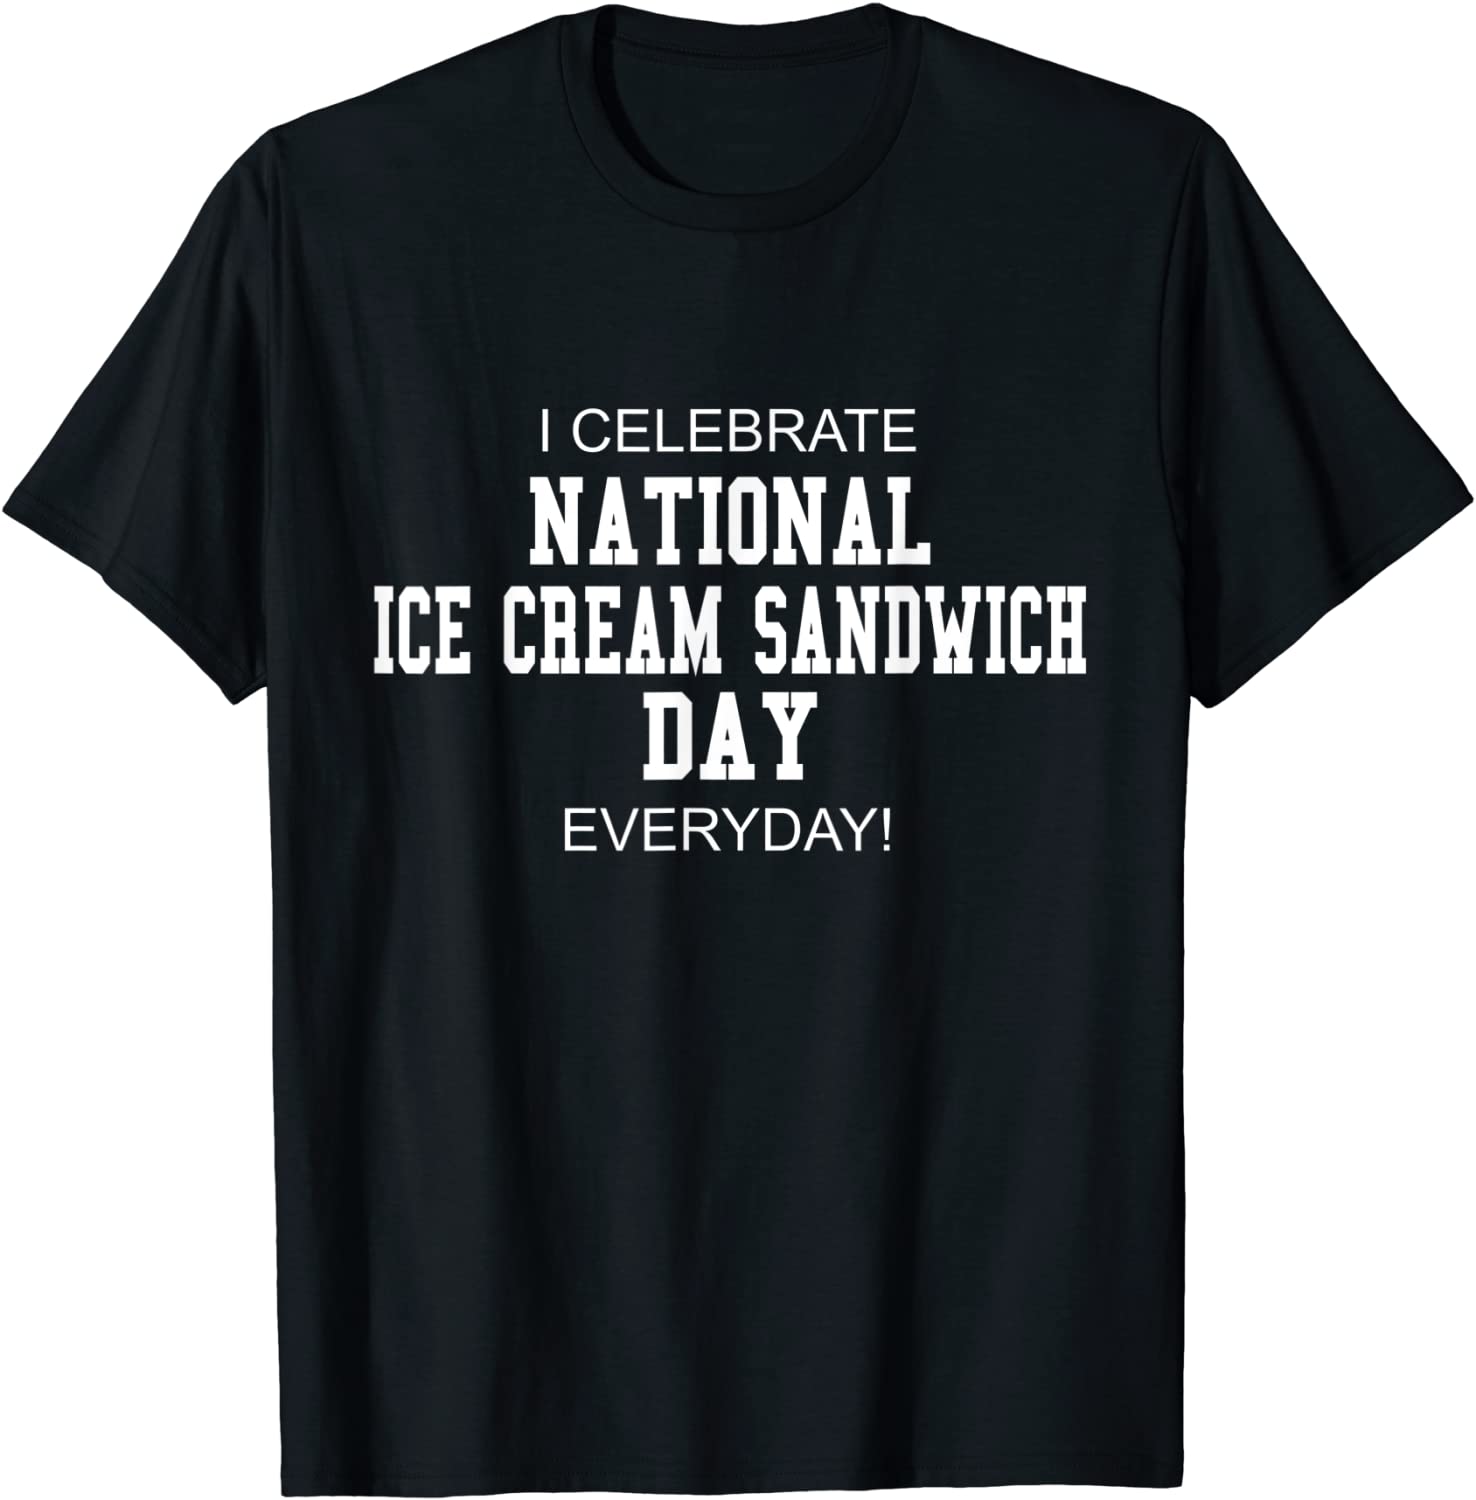 I Celebrate National Ice Cream Sandwich Day Everyday! T-Shirt